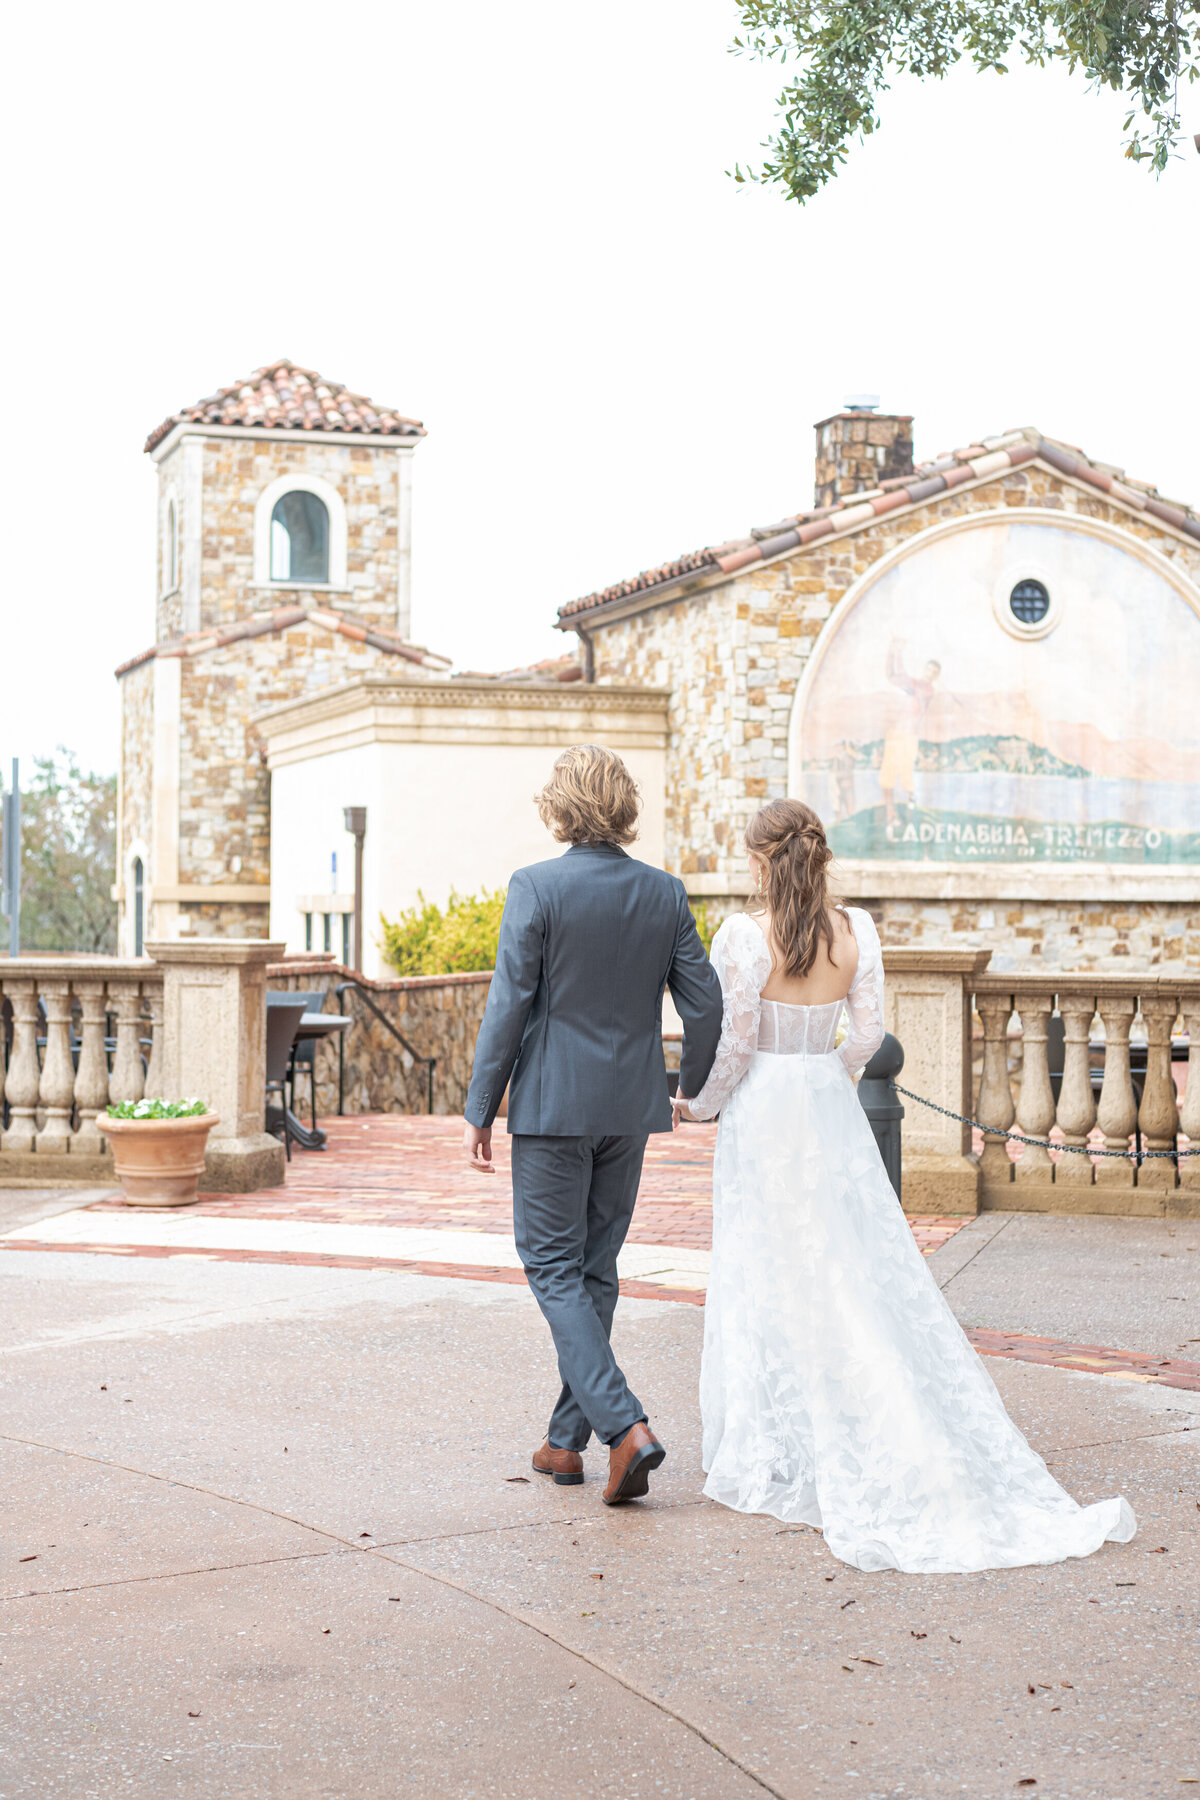 Italian inspired wedding